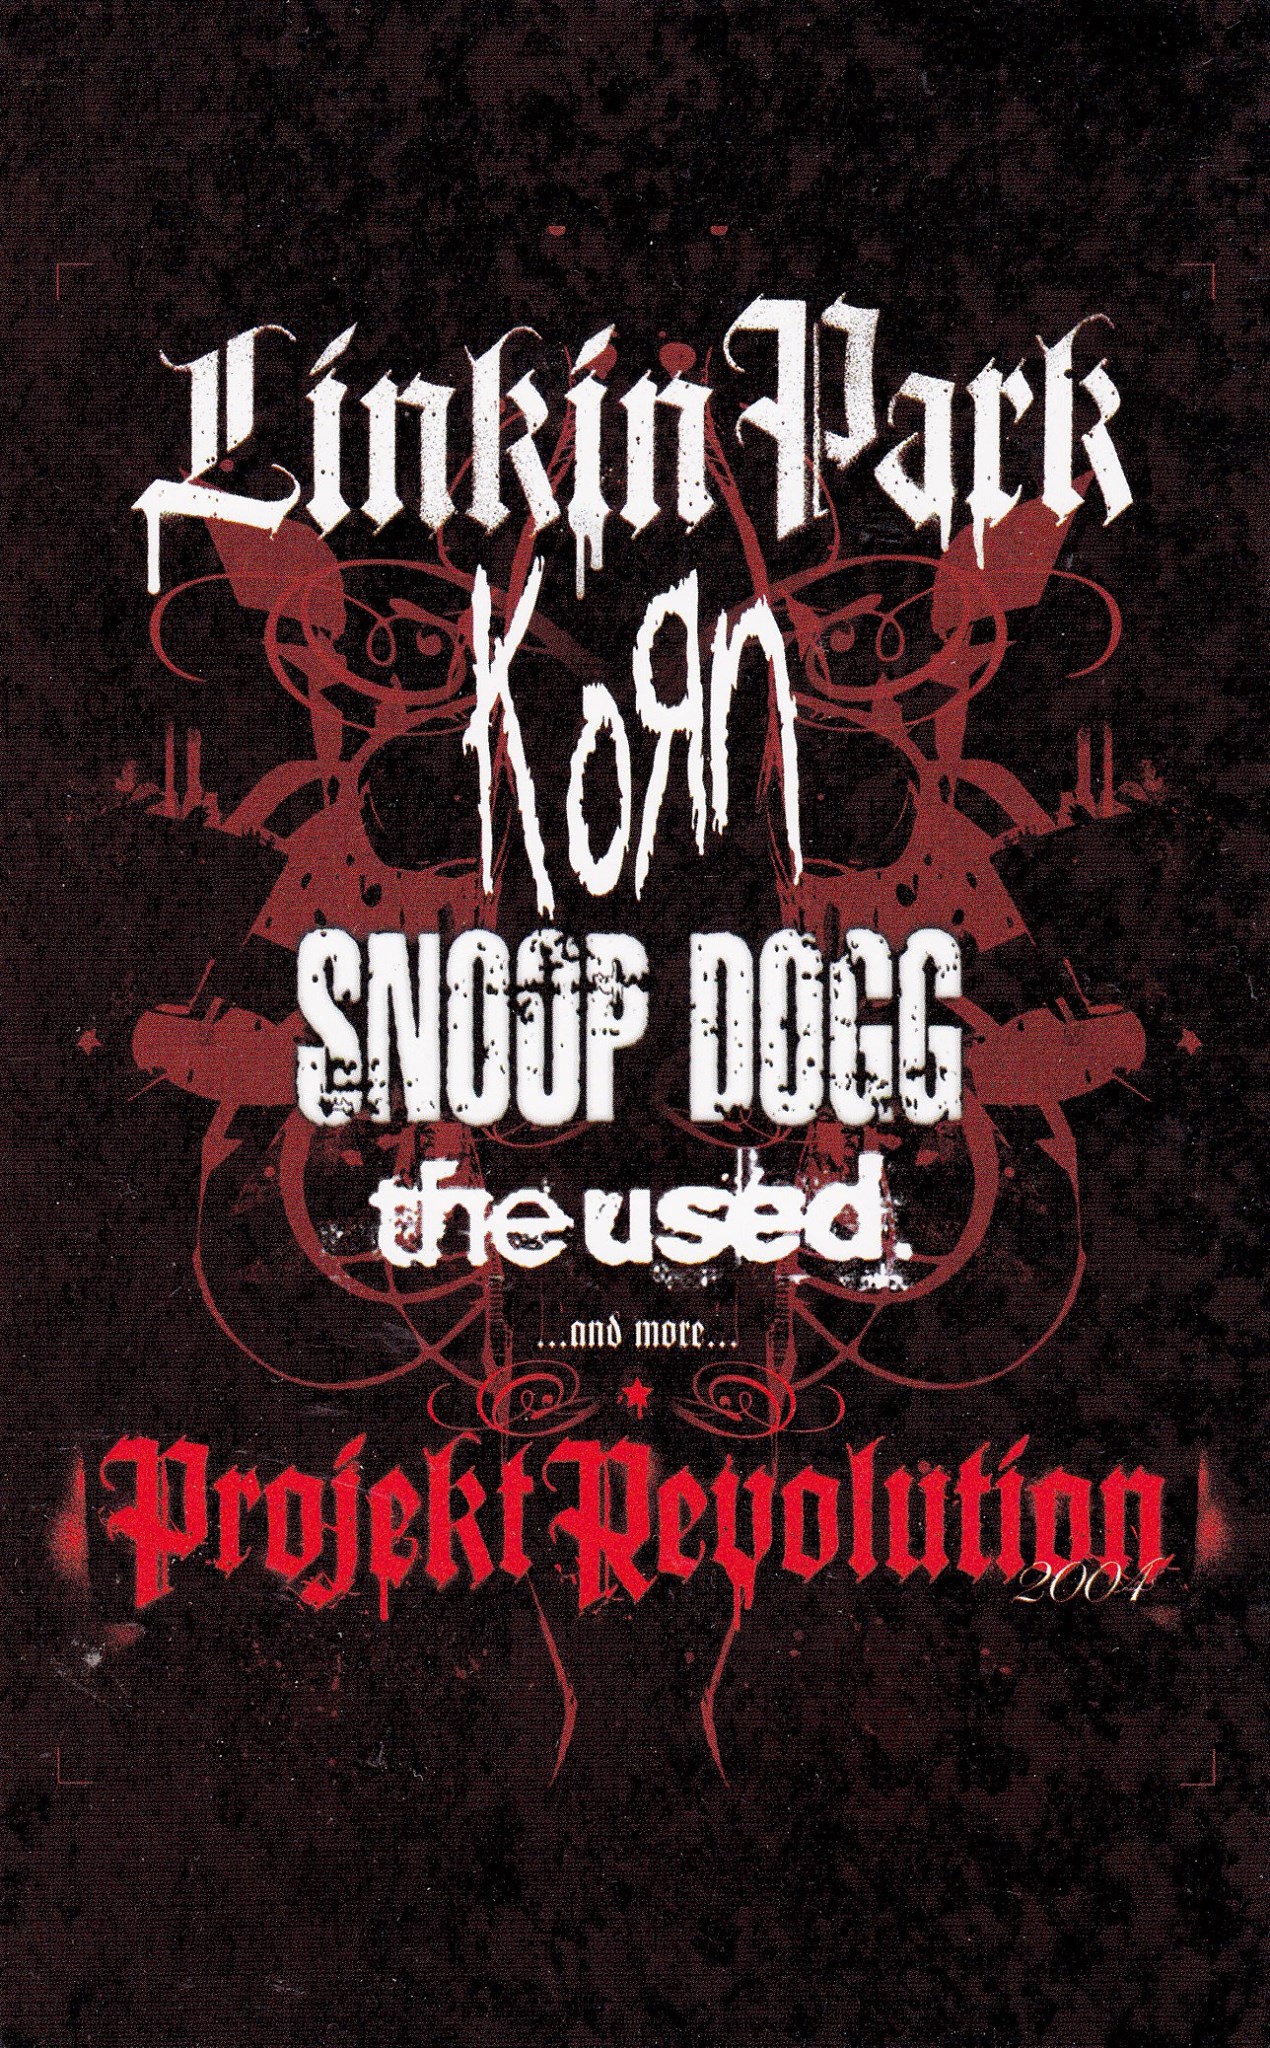 projekt revolution tour 2004